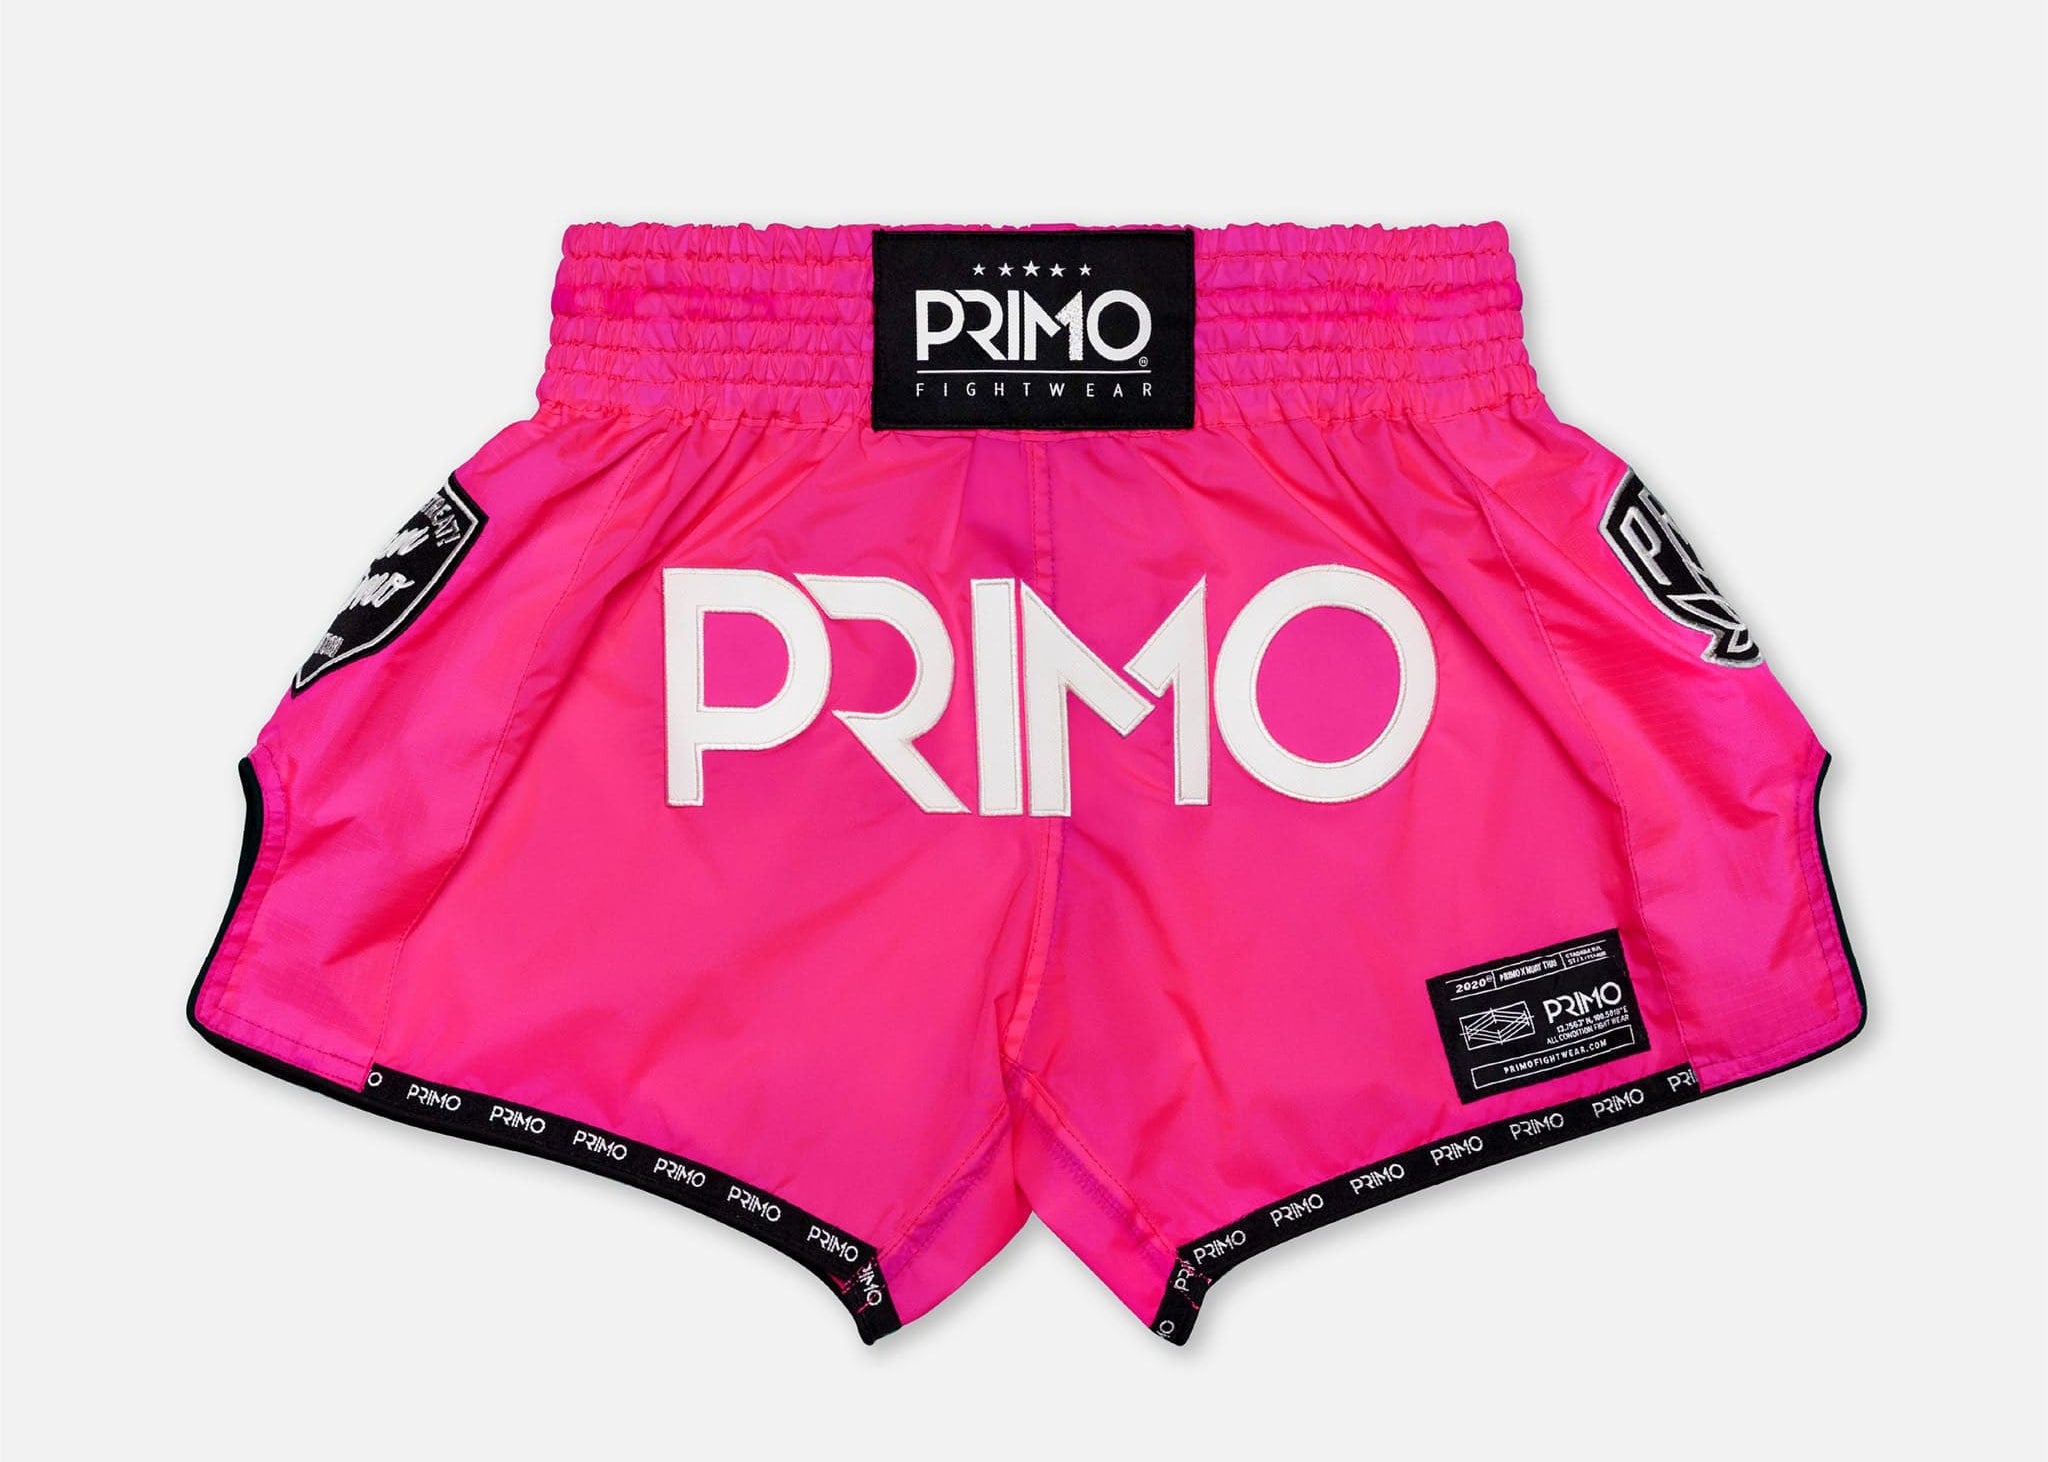 Primo Fight Wear Official Muay Thai Shorts - Super Nylon Series - Harlem World